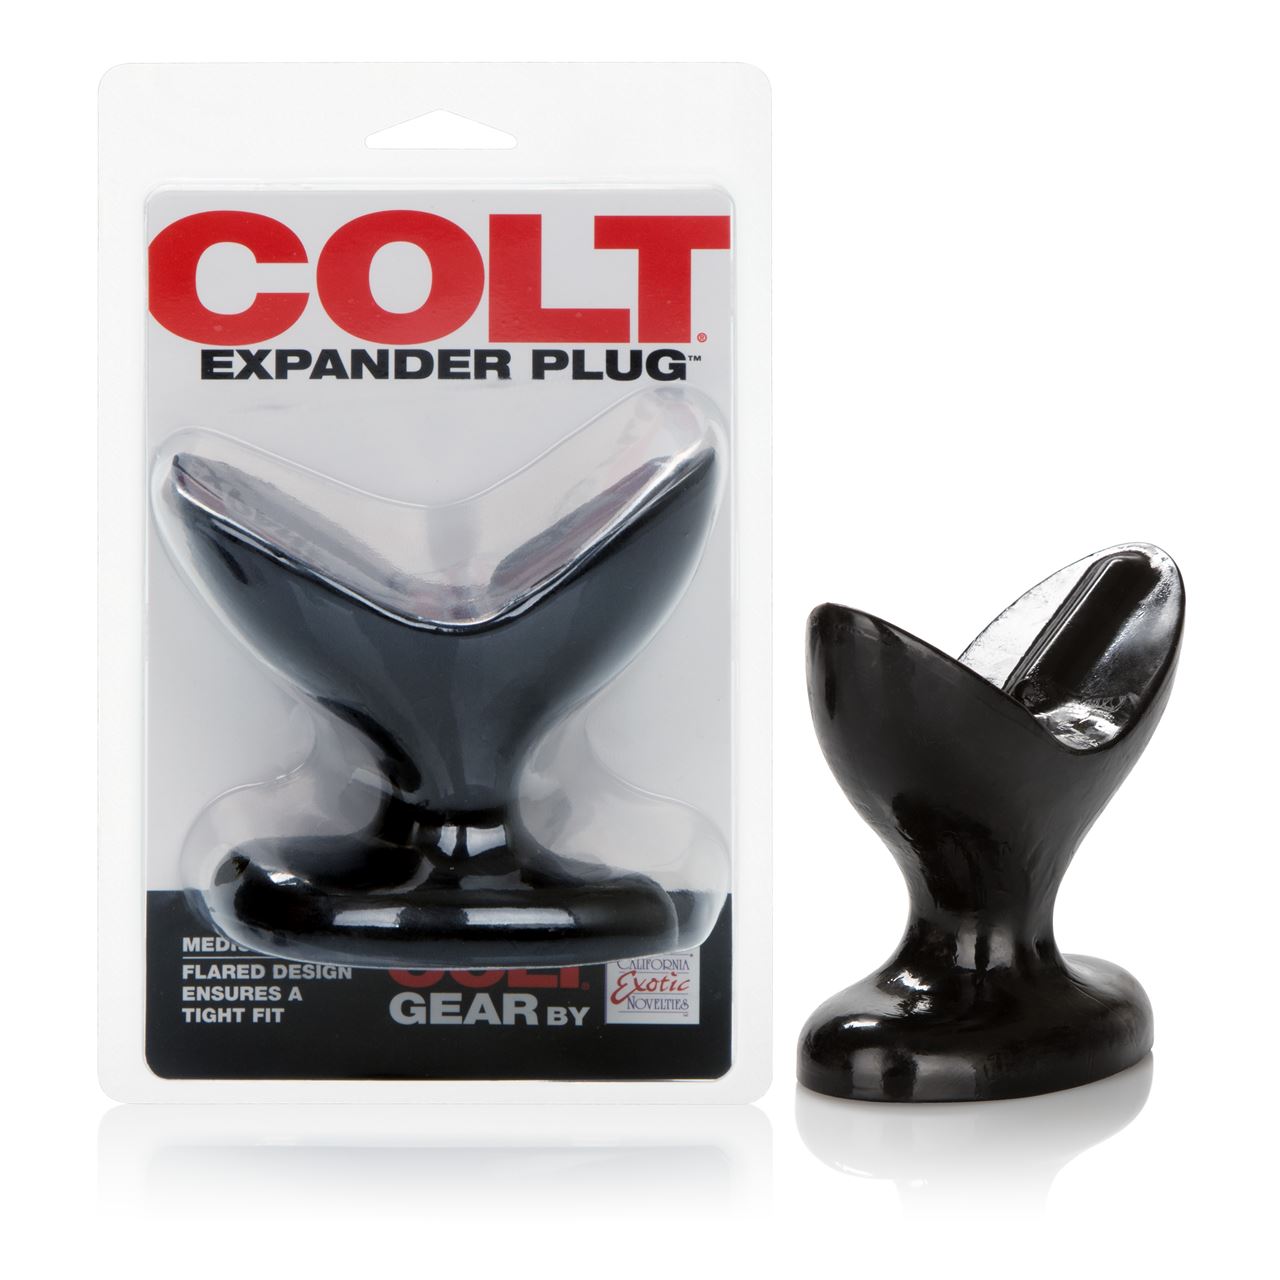 COLT-Expander-Plug-Medium